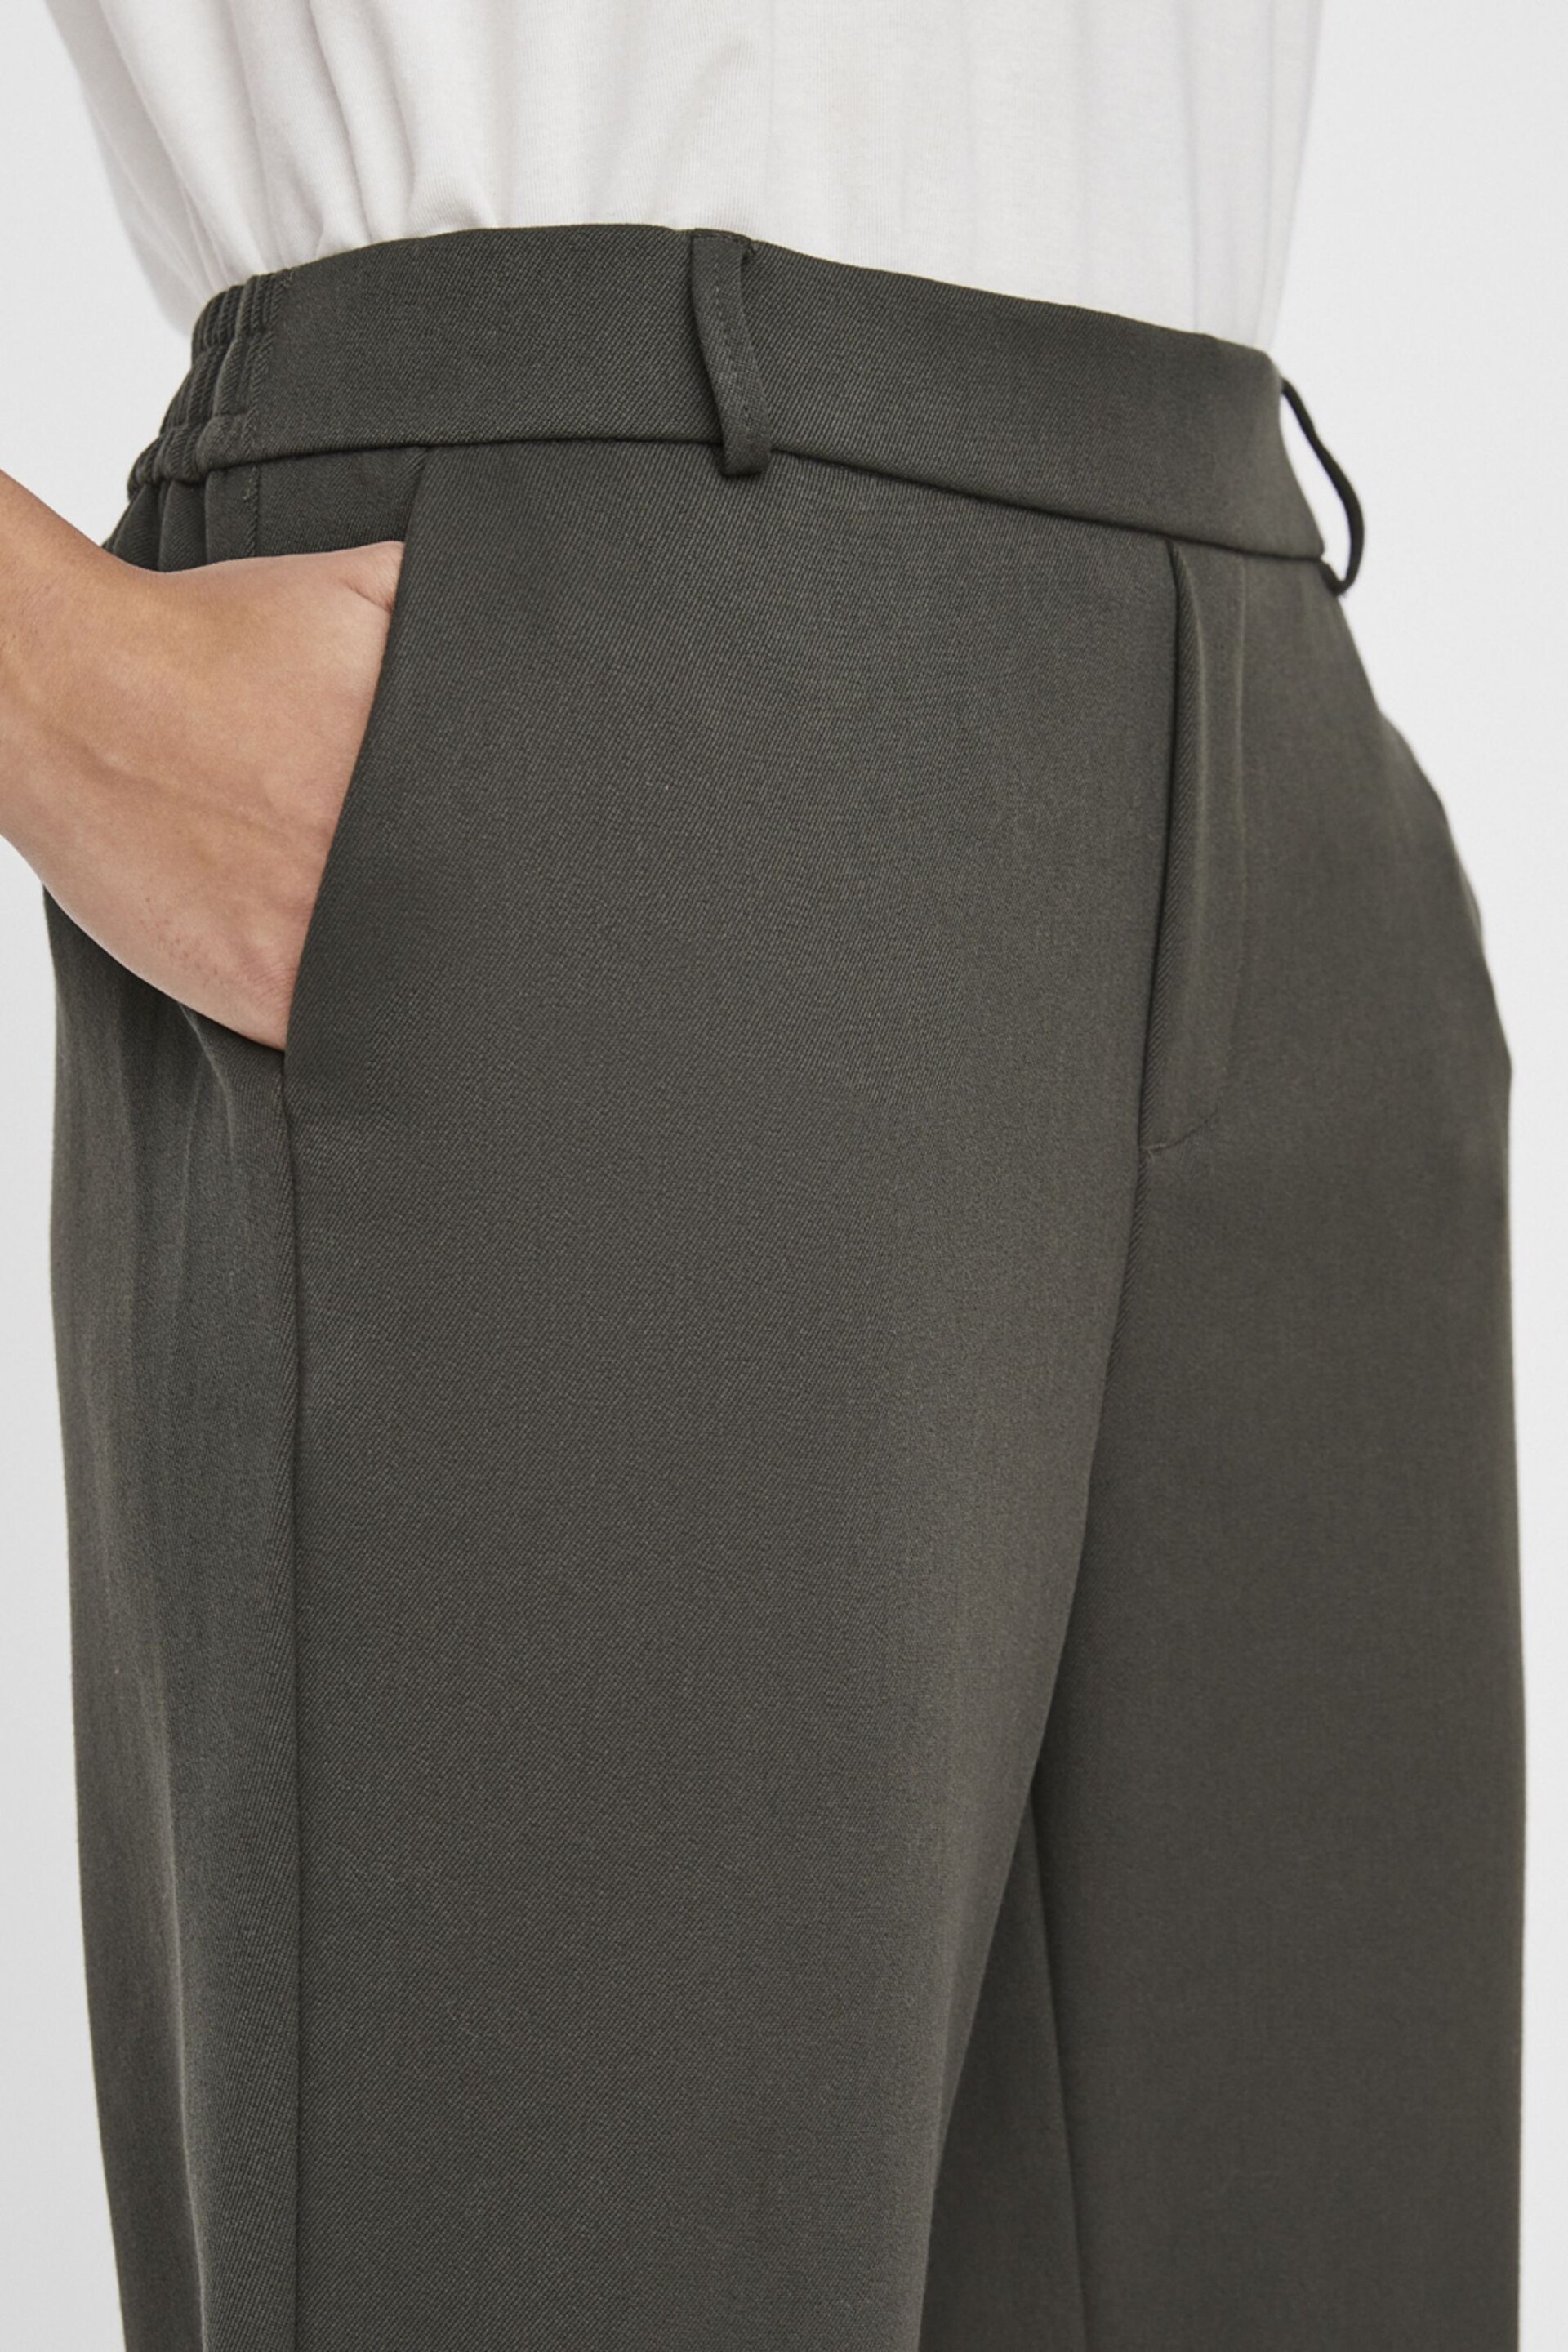 VERO MODA Dark Grey Mid Waist Straight Leg Trousers - Image 4 of 6